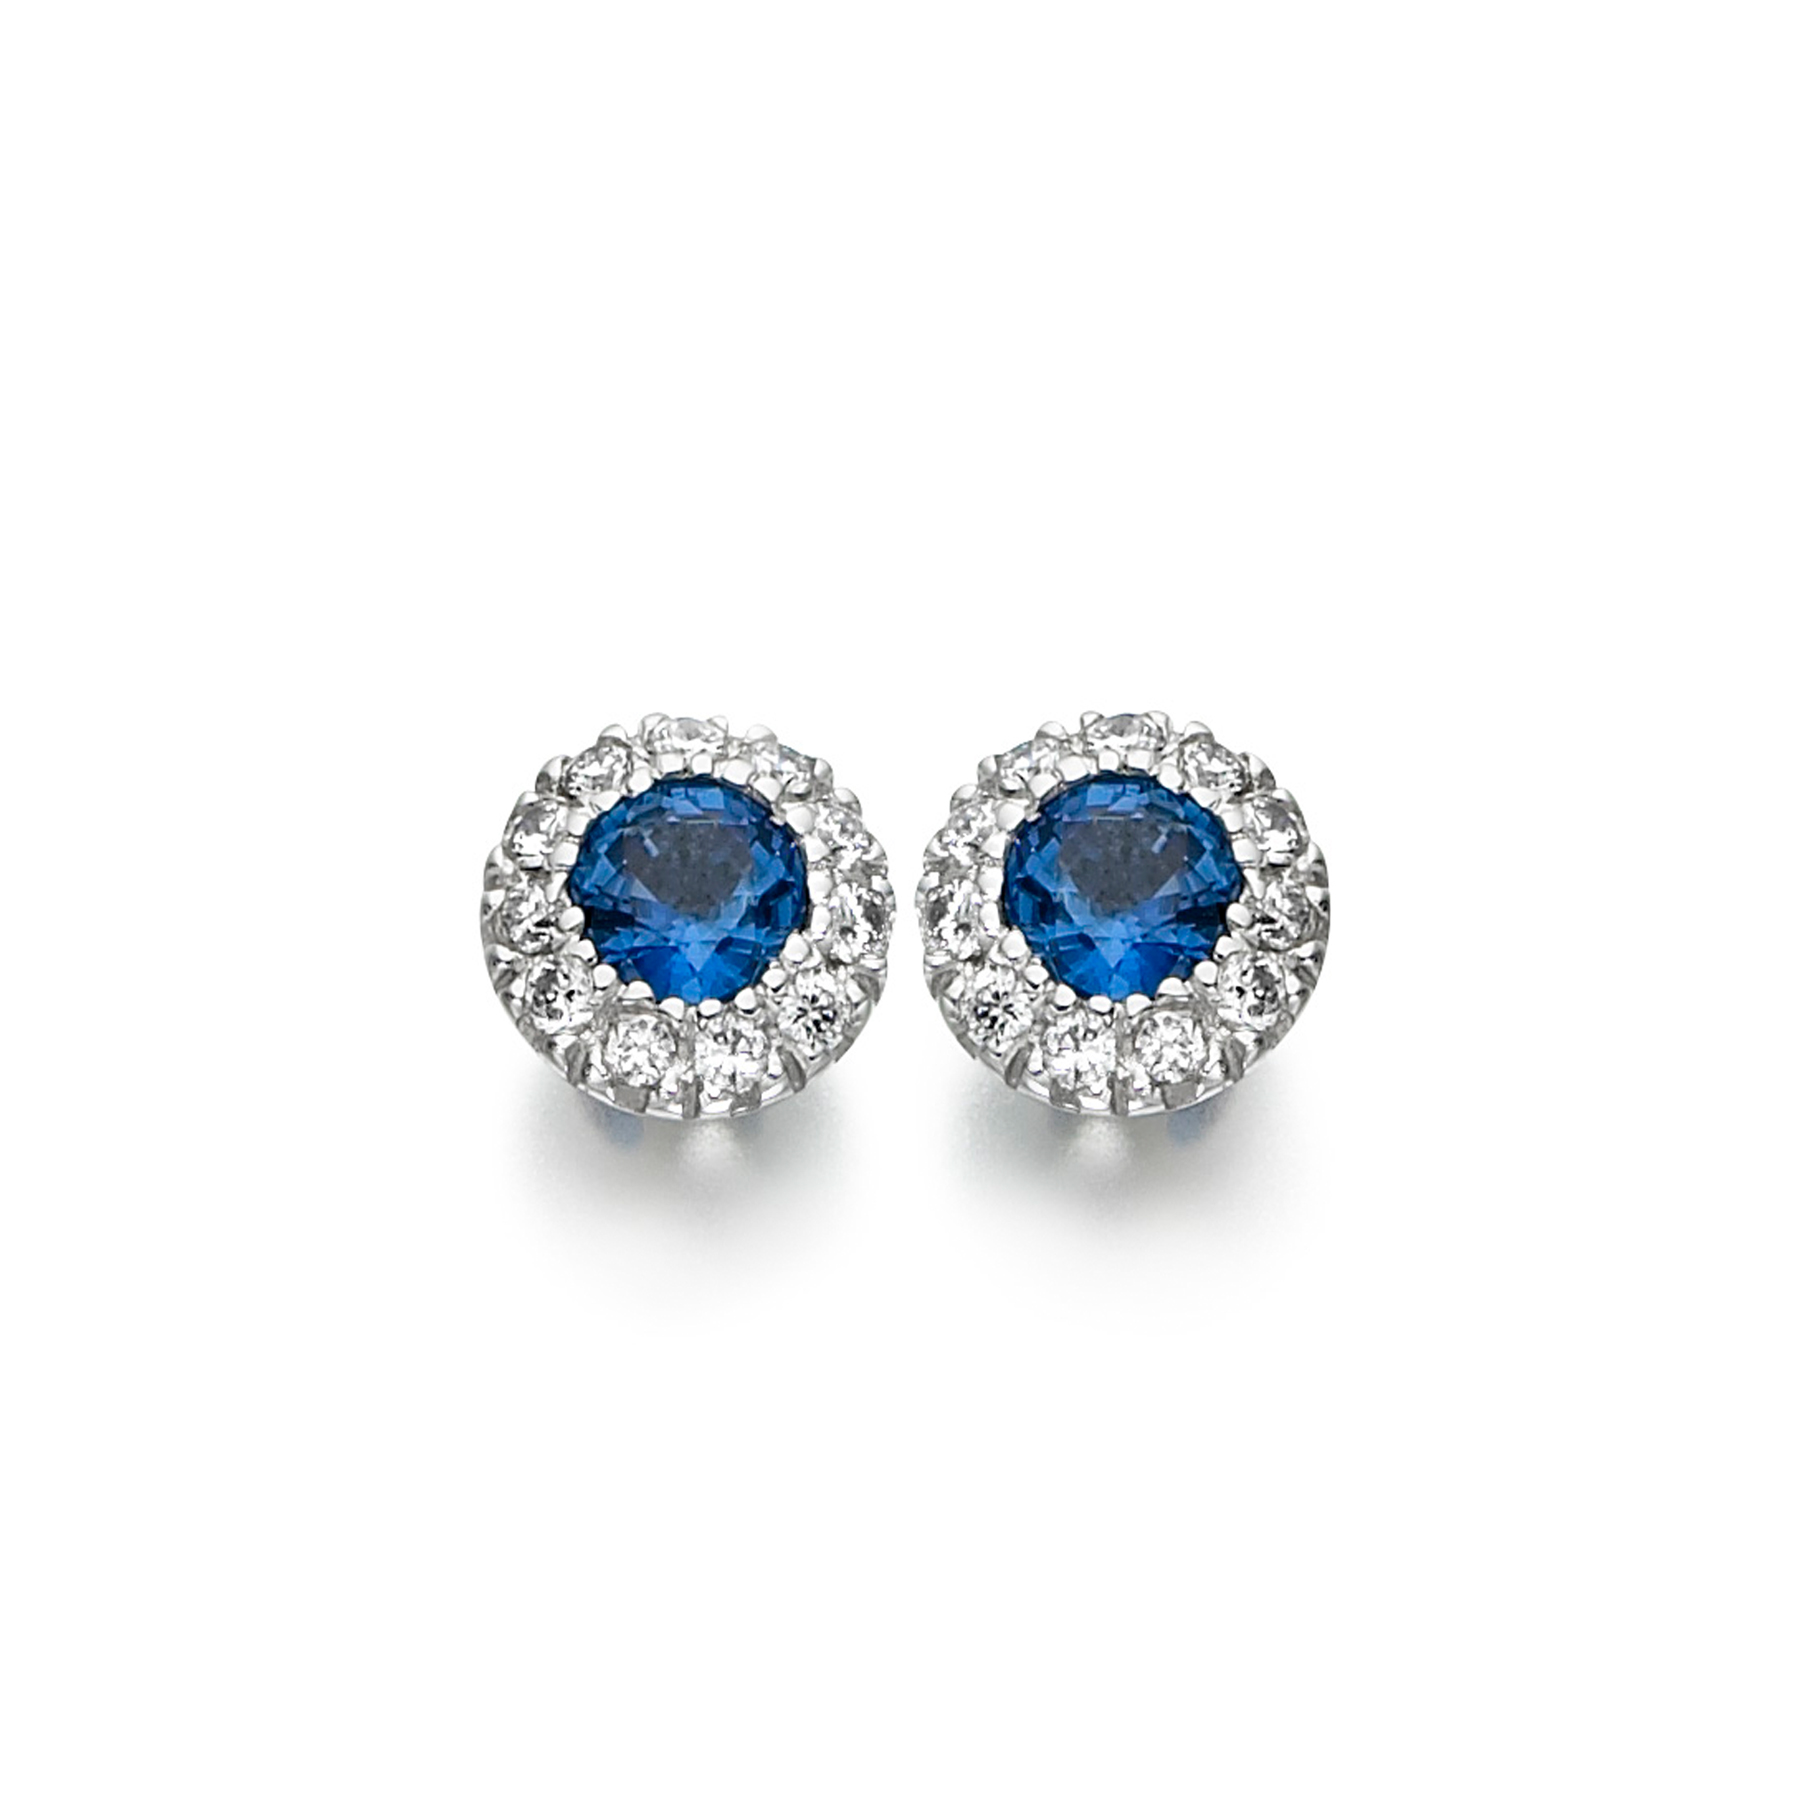 Blue sapphire and diamond stud earrings